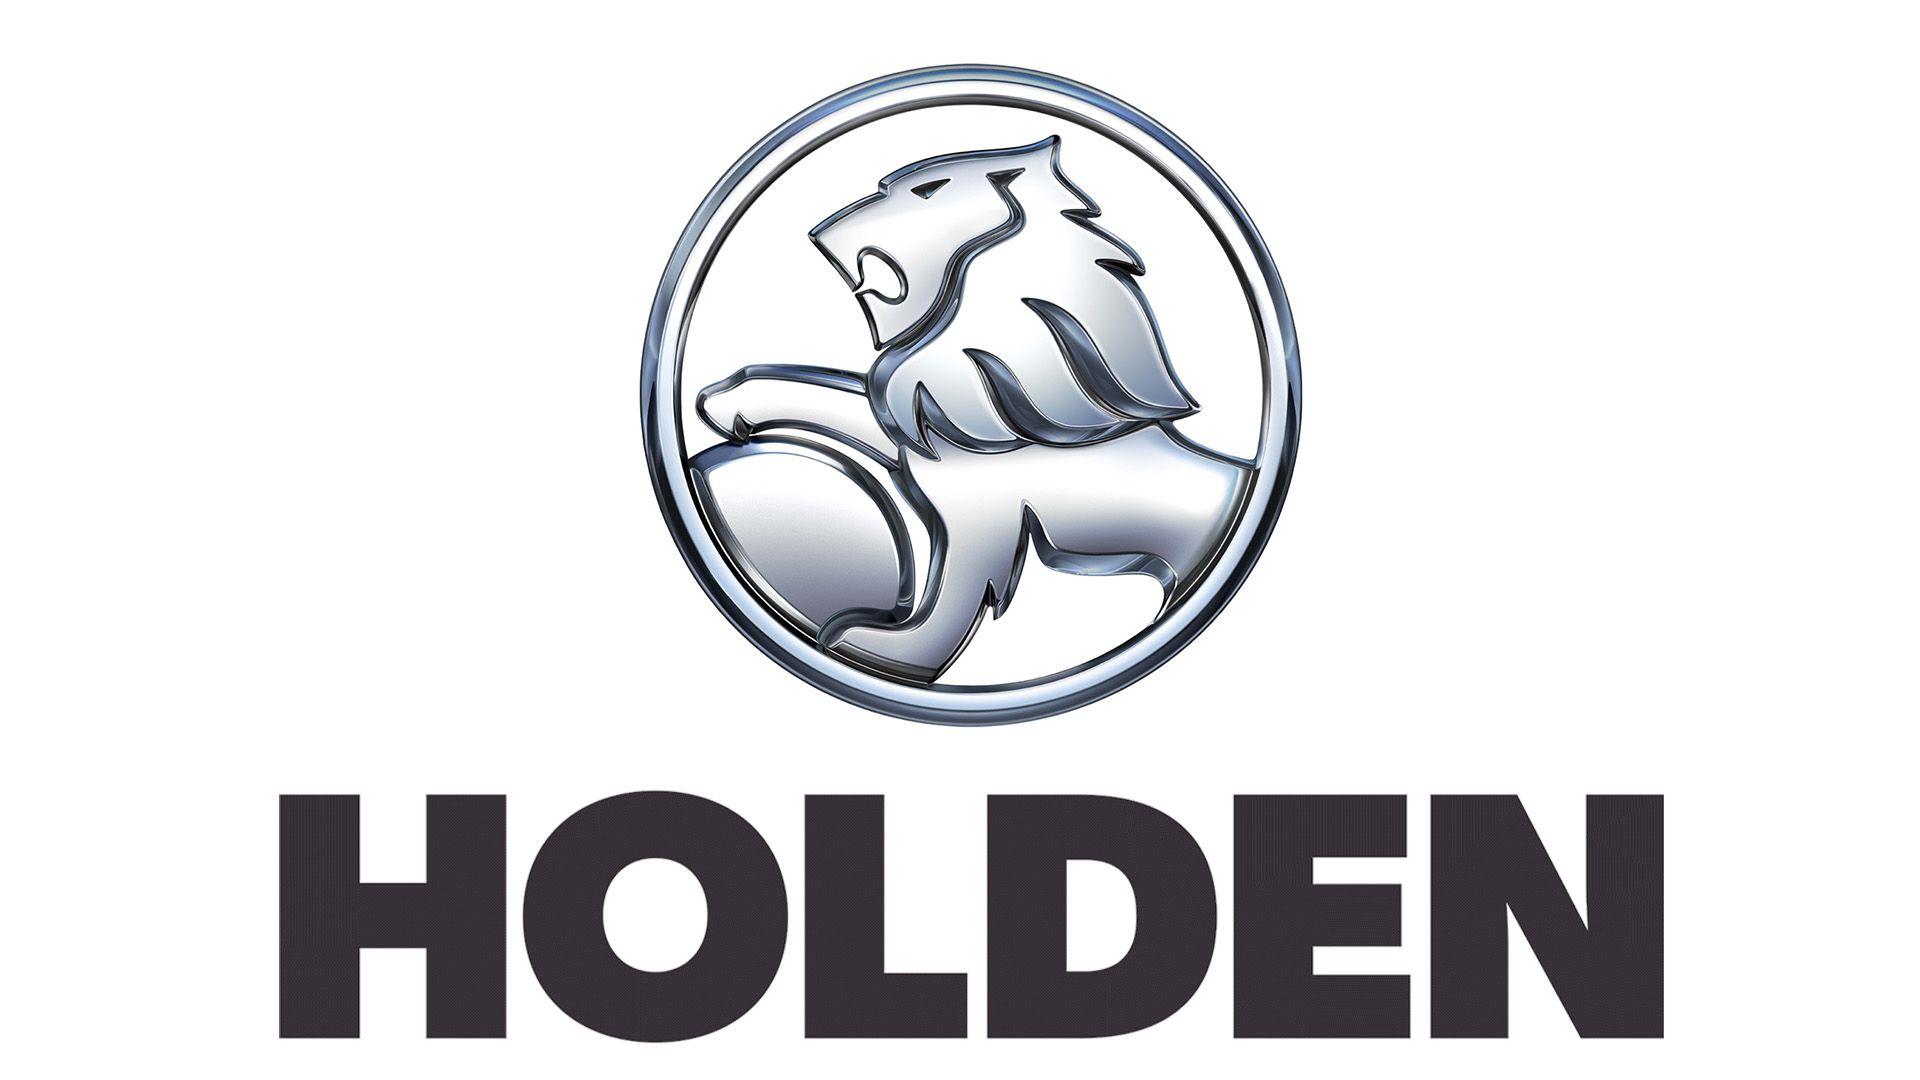 Holden Logo - Holden Logo, Holden Symbol, Meaning, History and Evolution